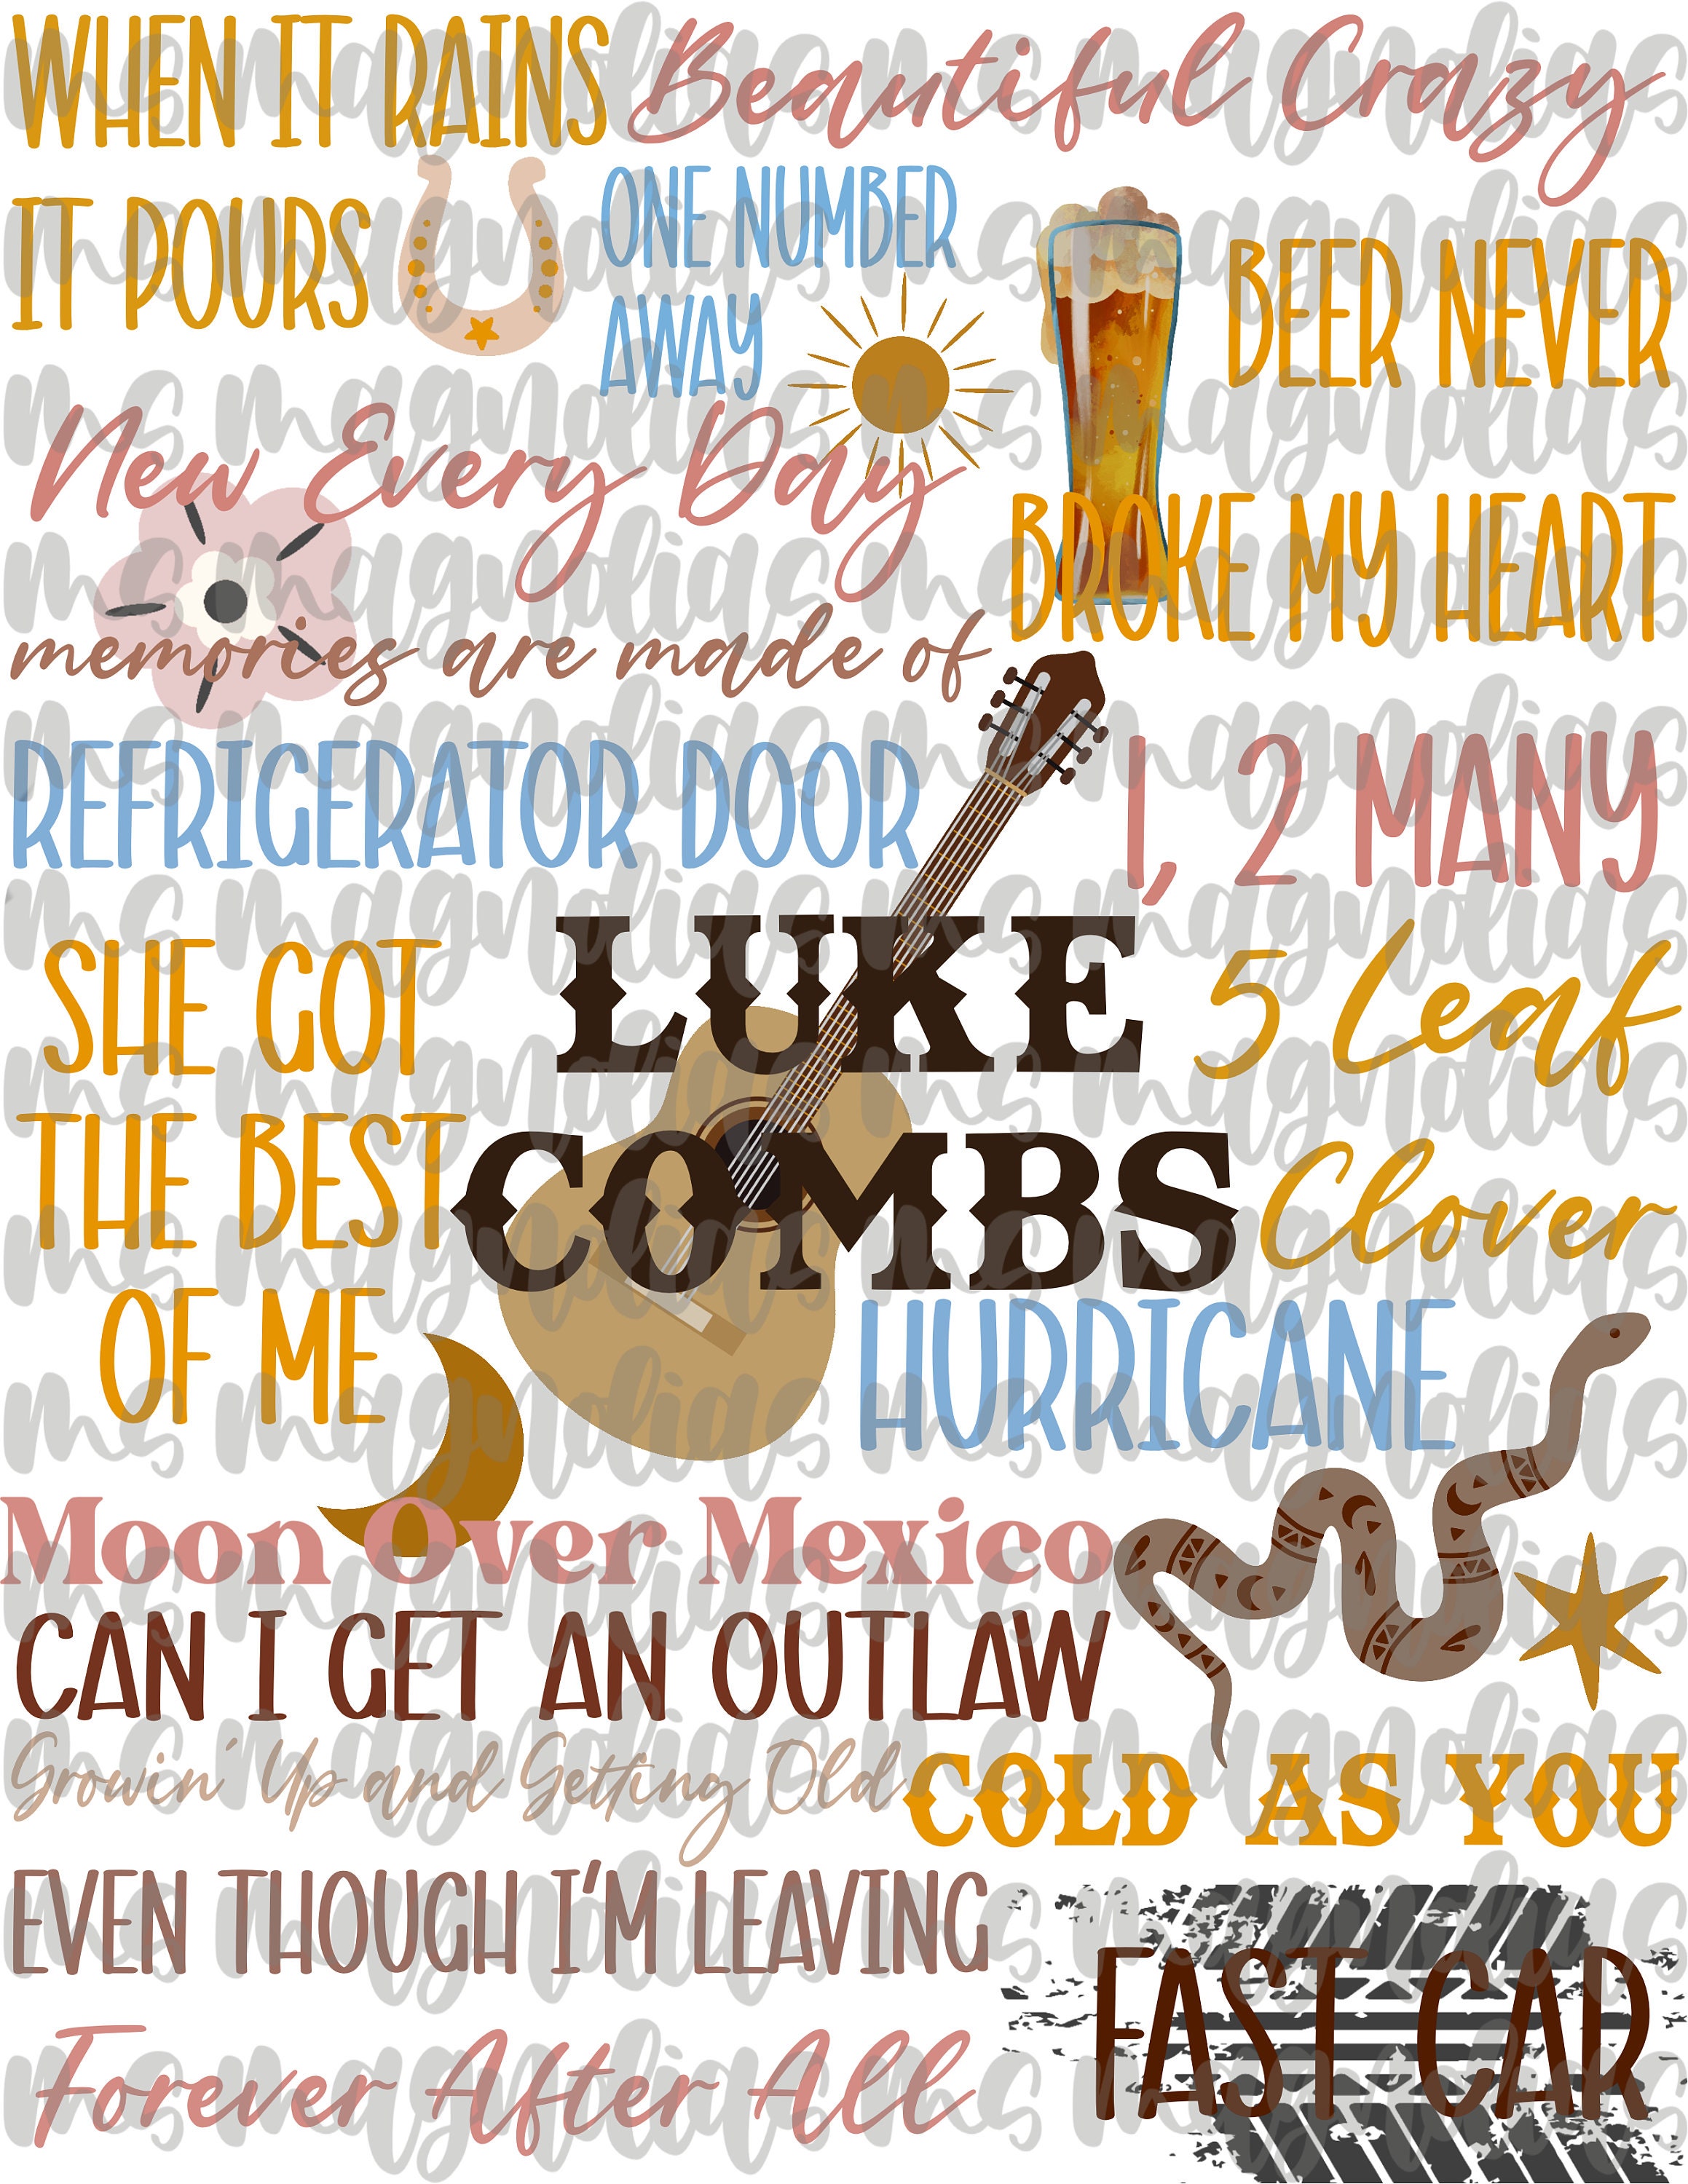 Luke Combs - Beautiful Crazy Lyrics Poster, Best Gift Ever, Lyrics Print,  Song Lyrics Poster, Lyrics Wall Art Decor, Home Decor